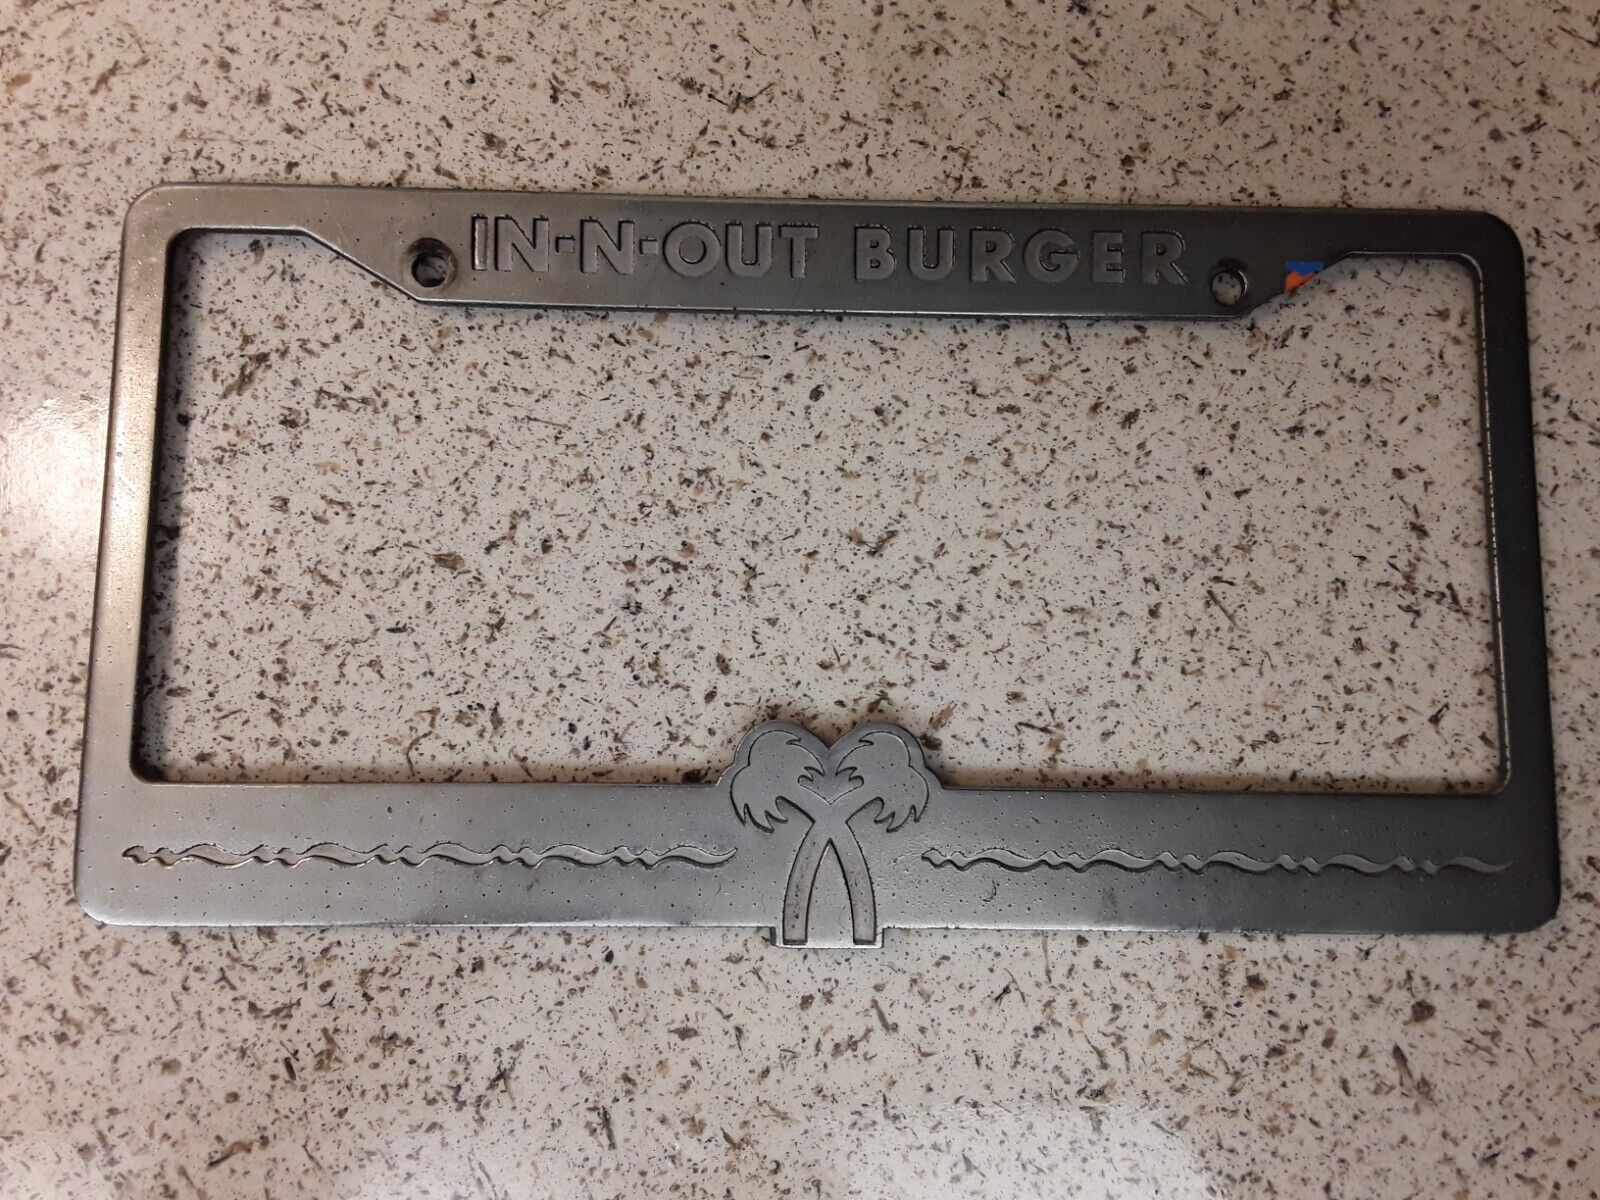 IN-N-OUT BURGER, Restaurant Promotion, Metal Car License Plate Frame 